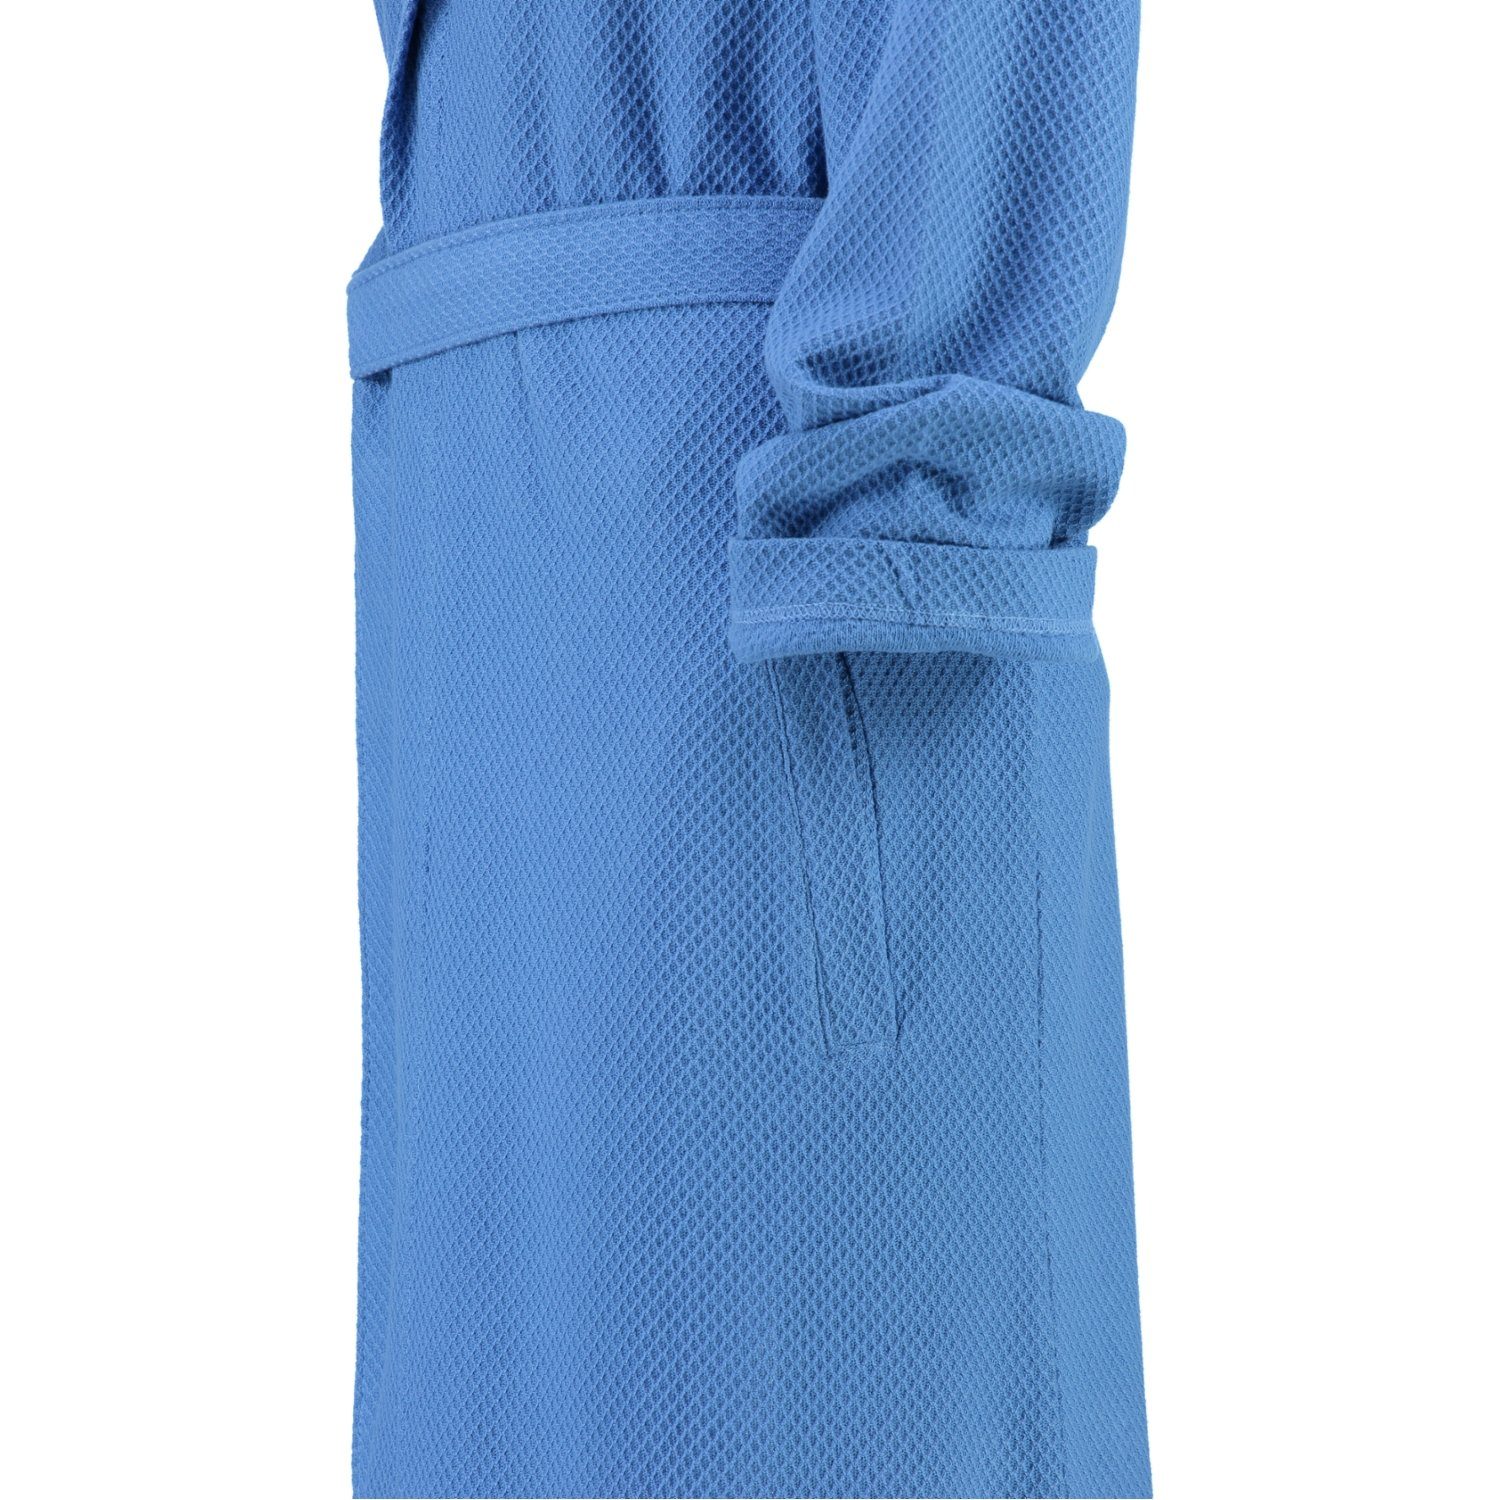 Langform, Pique blau Gürtel, Kapuze, Qualität 17 Baumwollmischung, Damenbademantel, s.Oliver